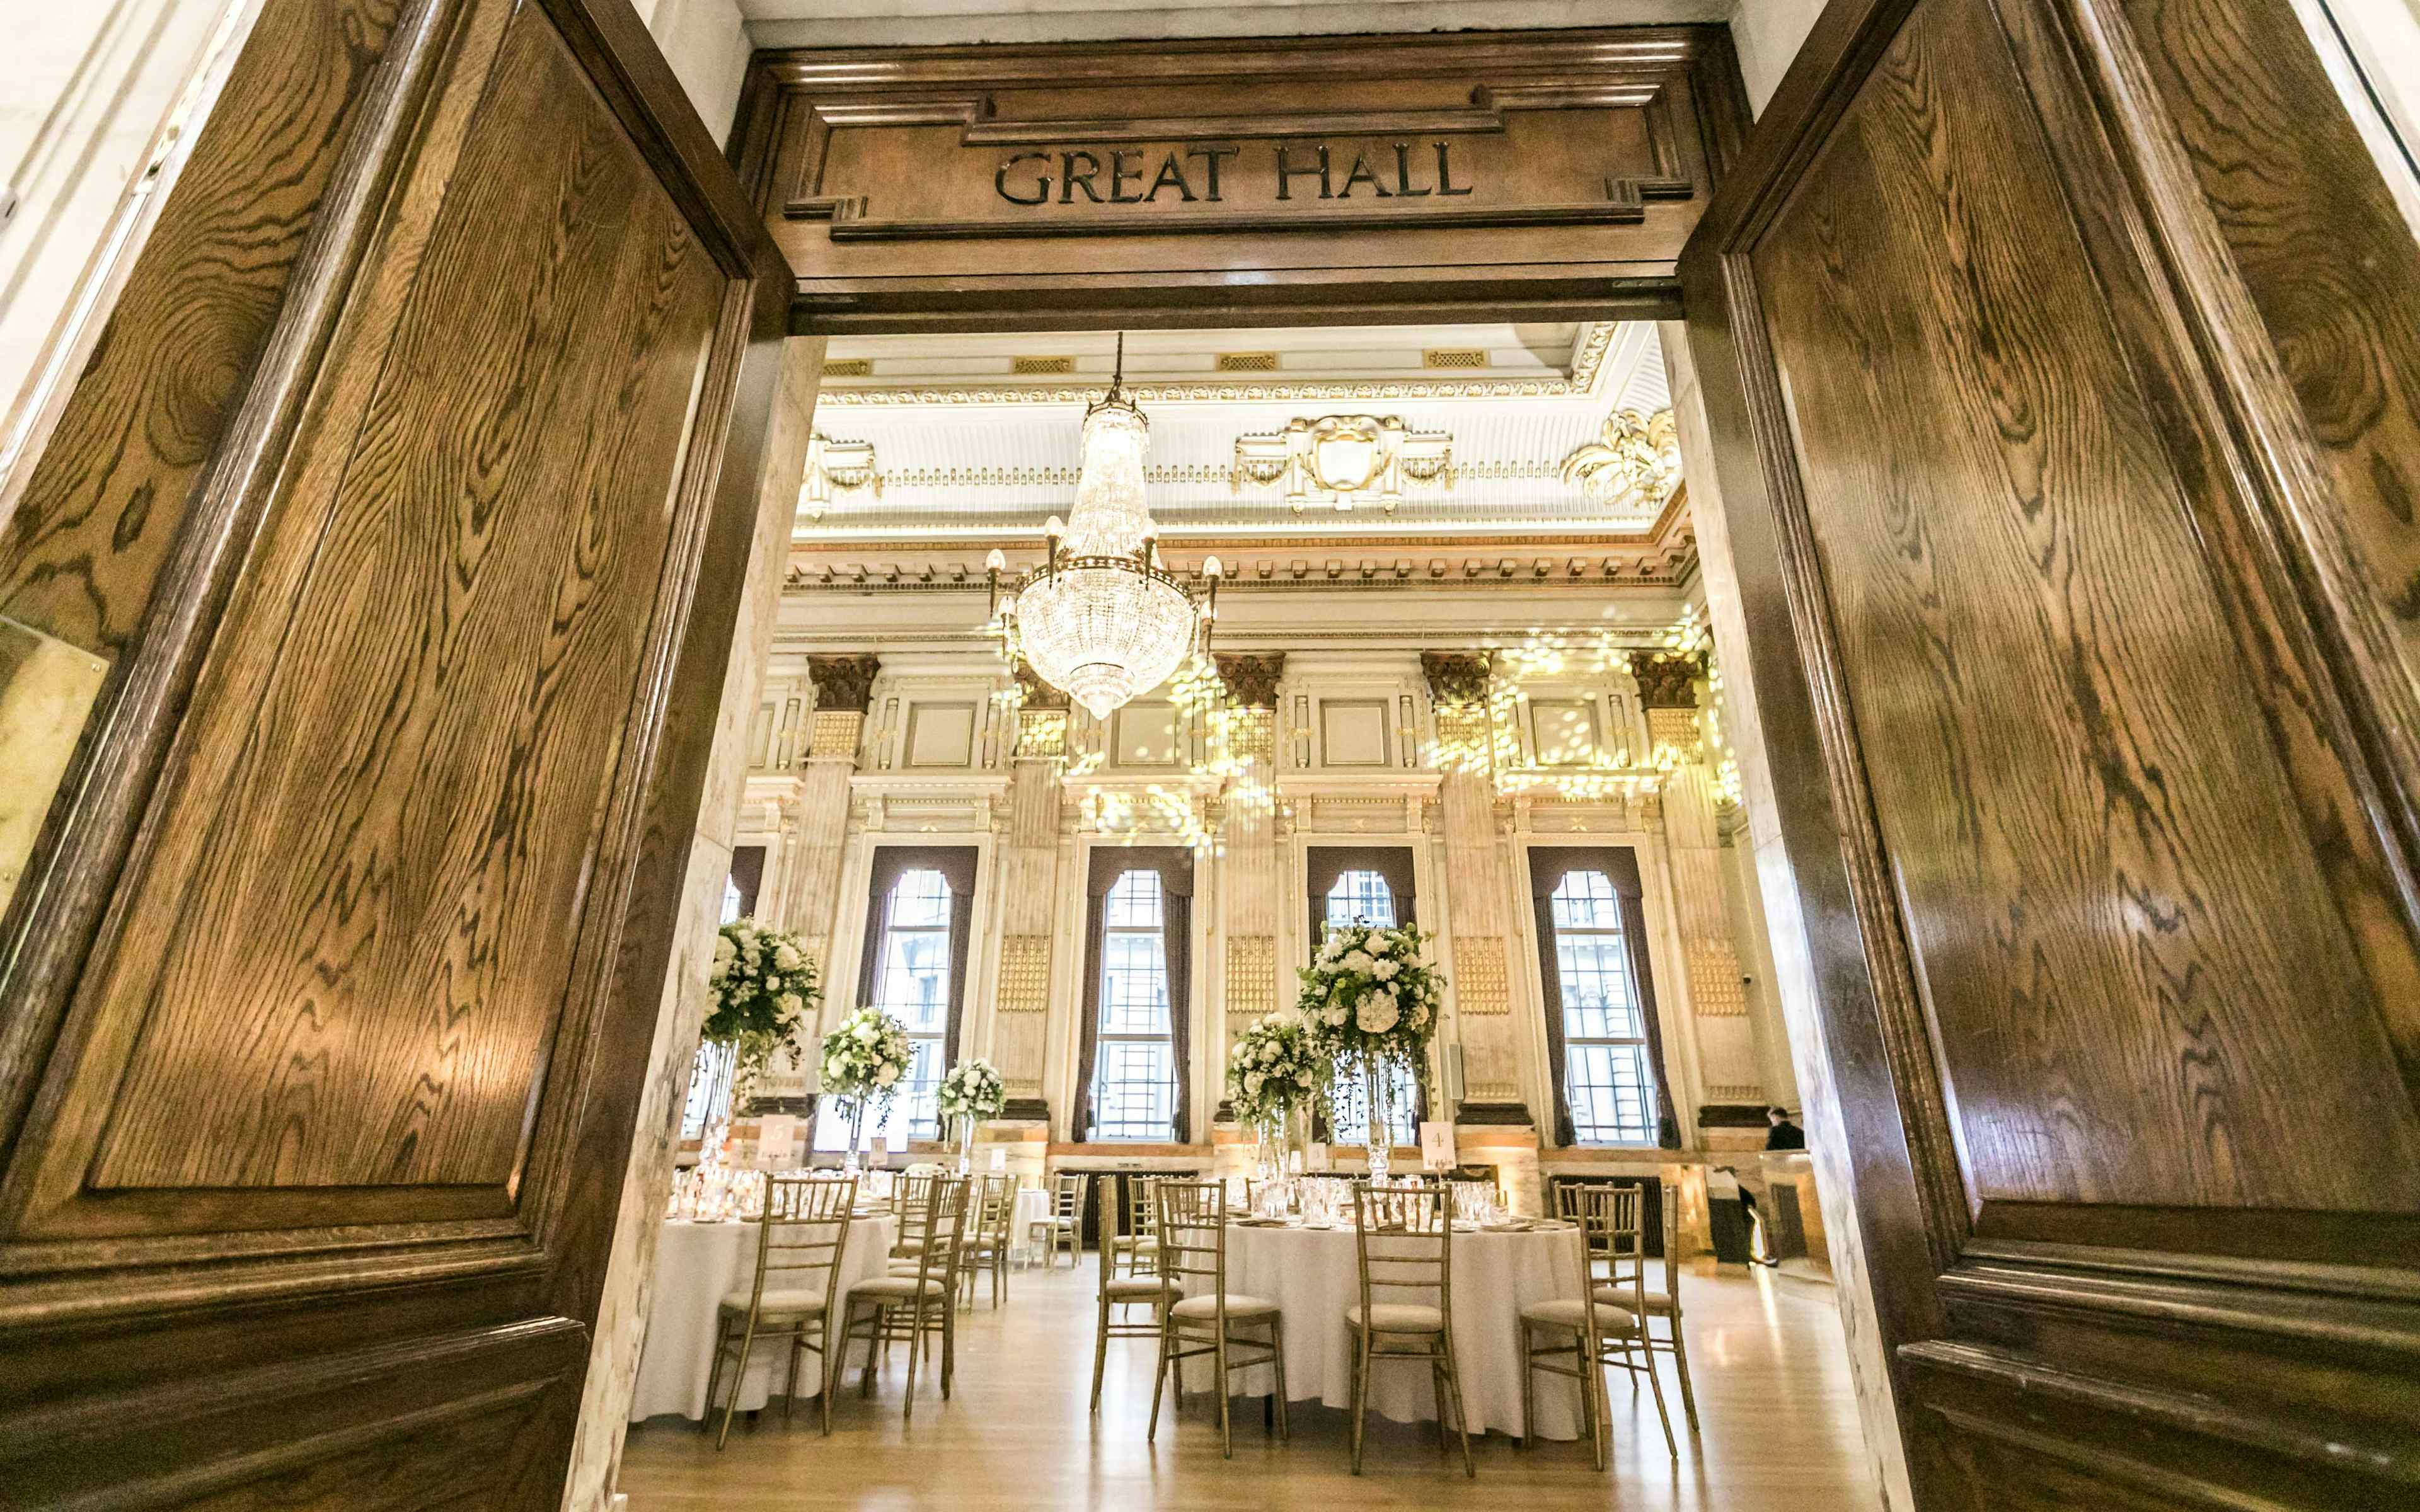 Great Hall - image